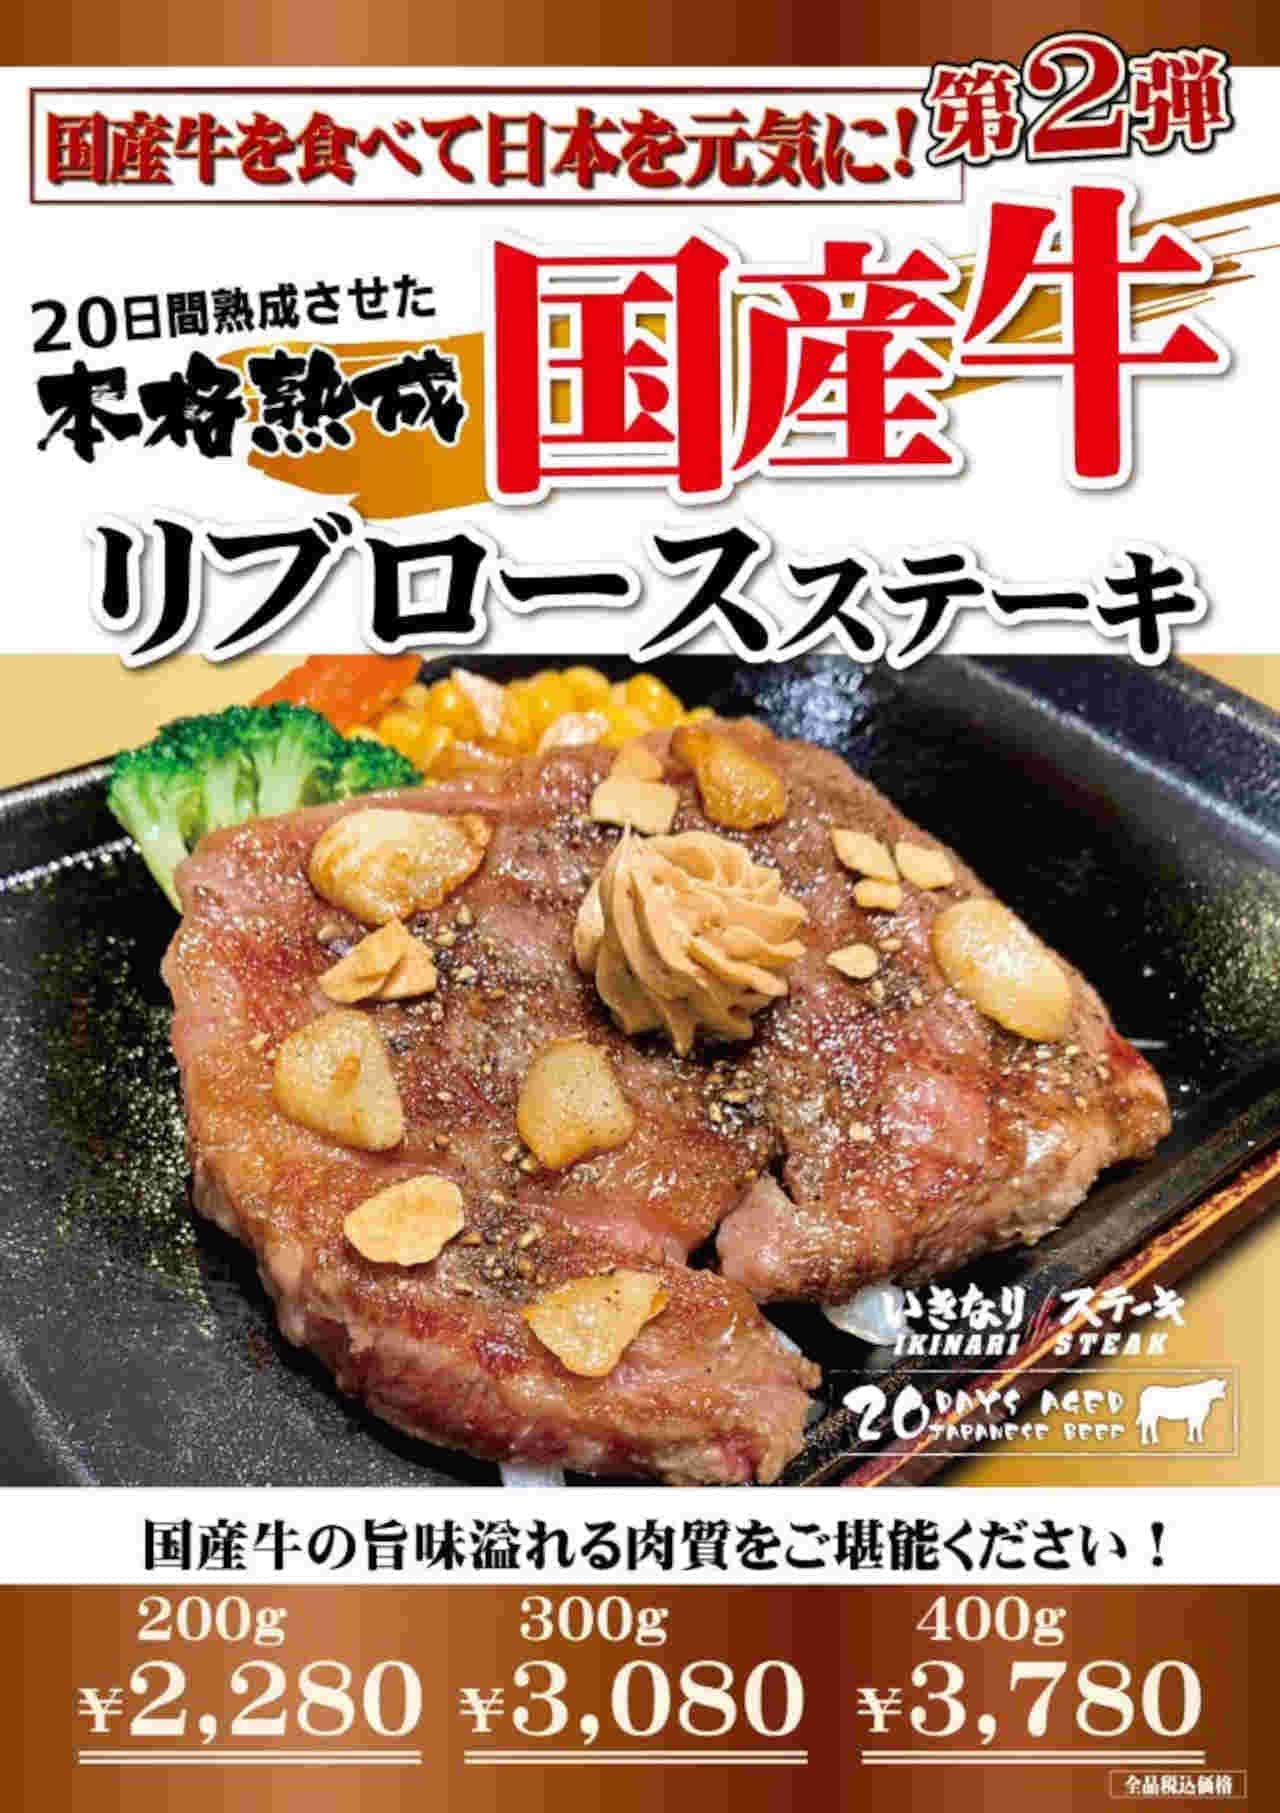 Ikinari!STEAK "Domestic beef sirloin steak" "Domestic beef rib roast steak"